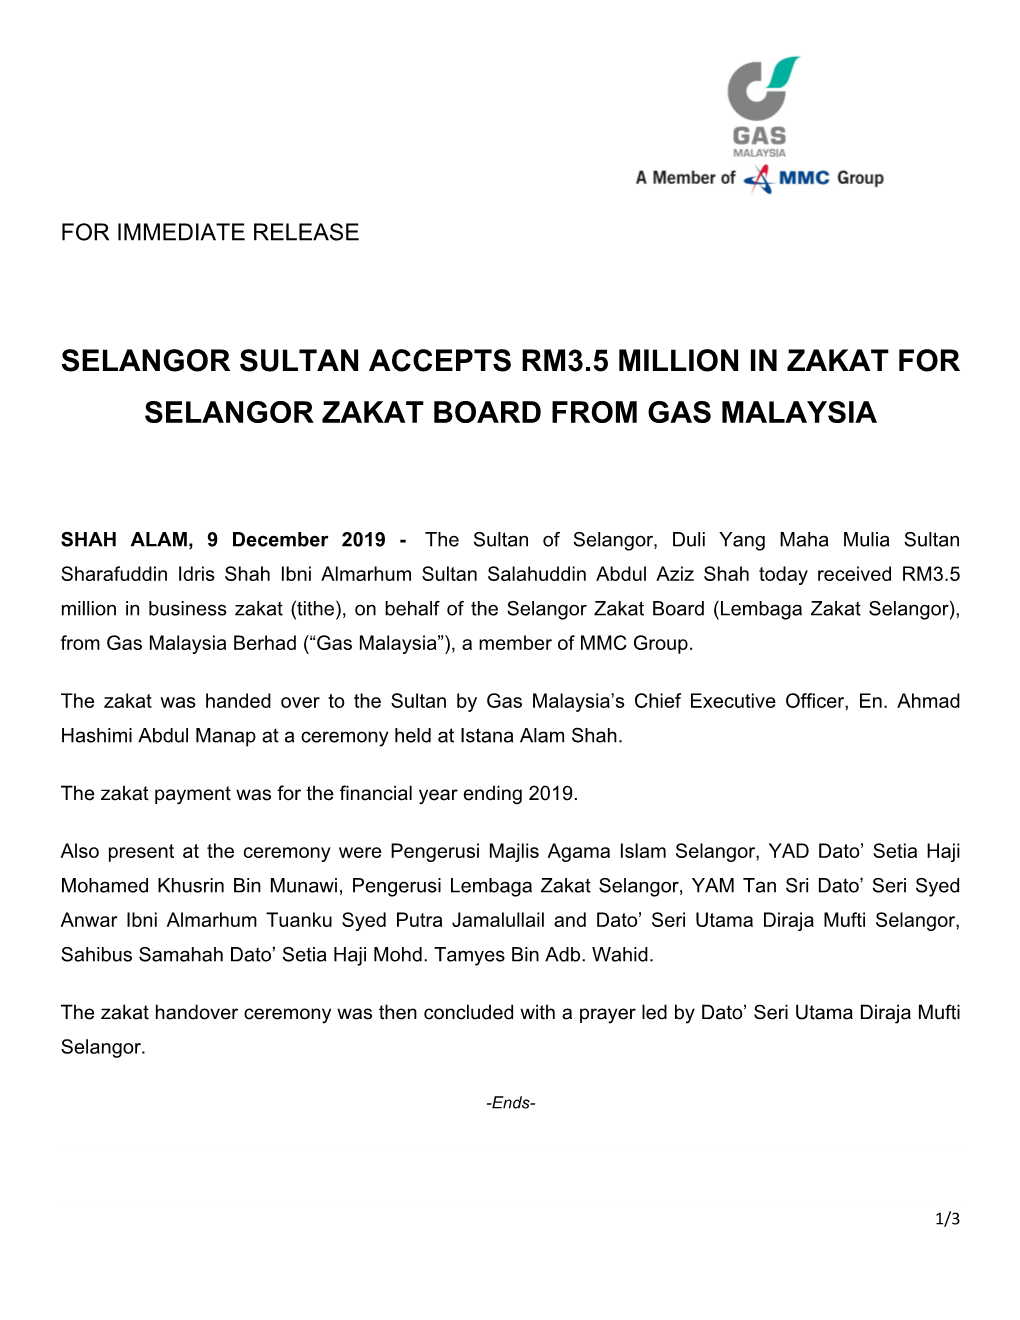 Selangor Sultan Accepts Rm3.5 Million in Zakat For